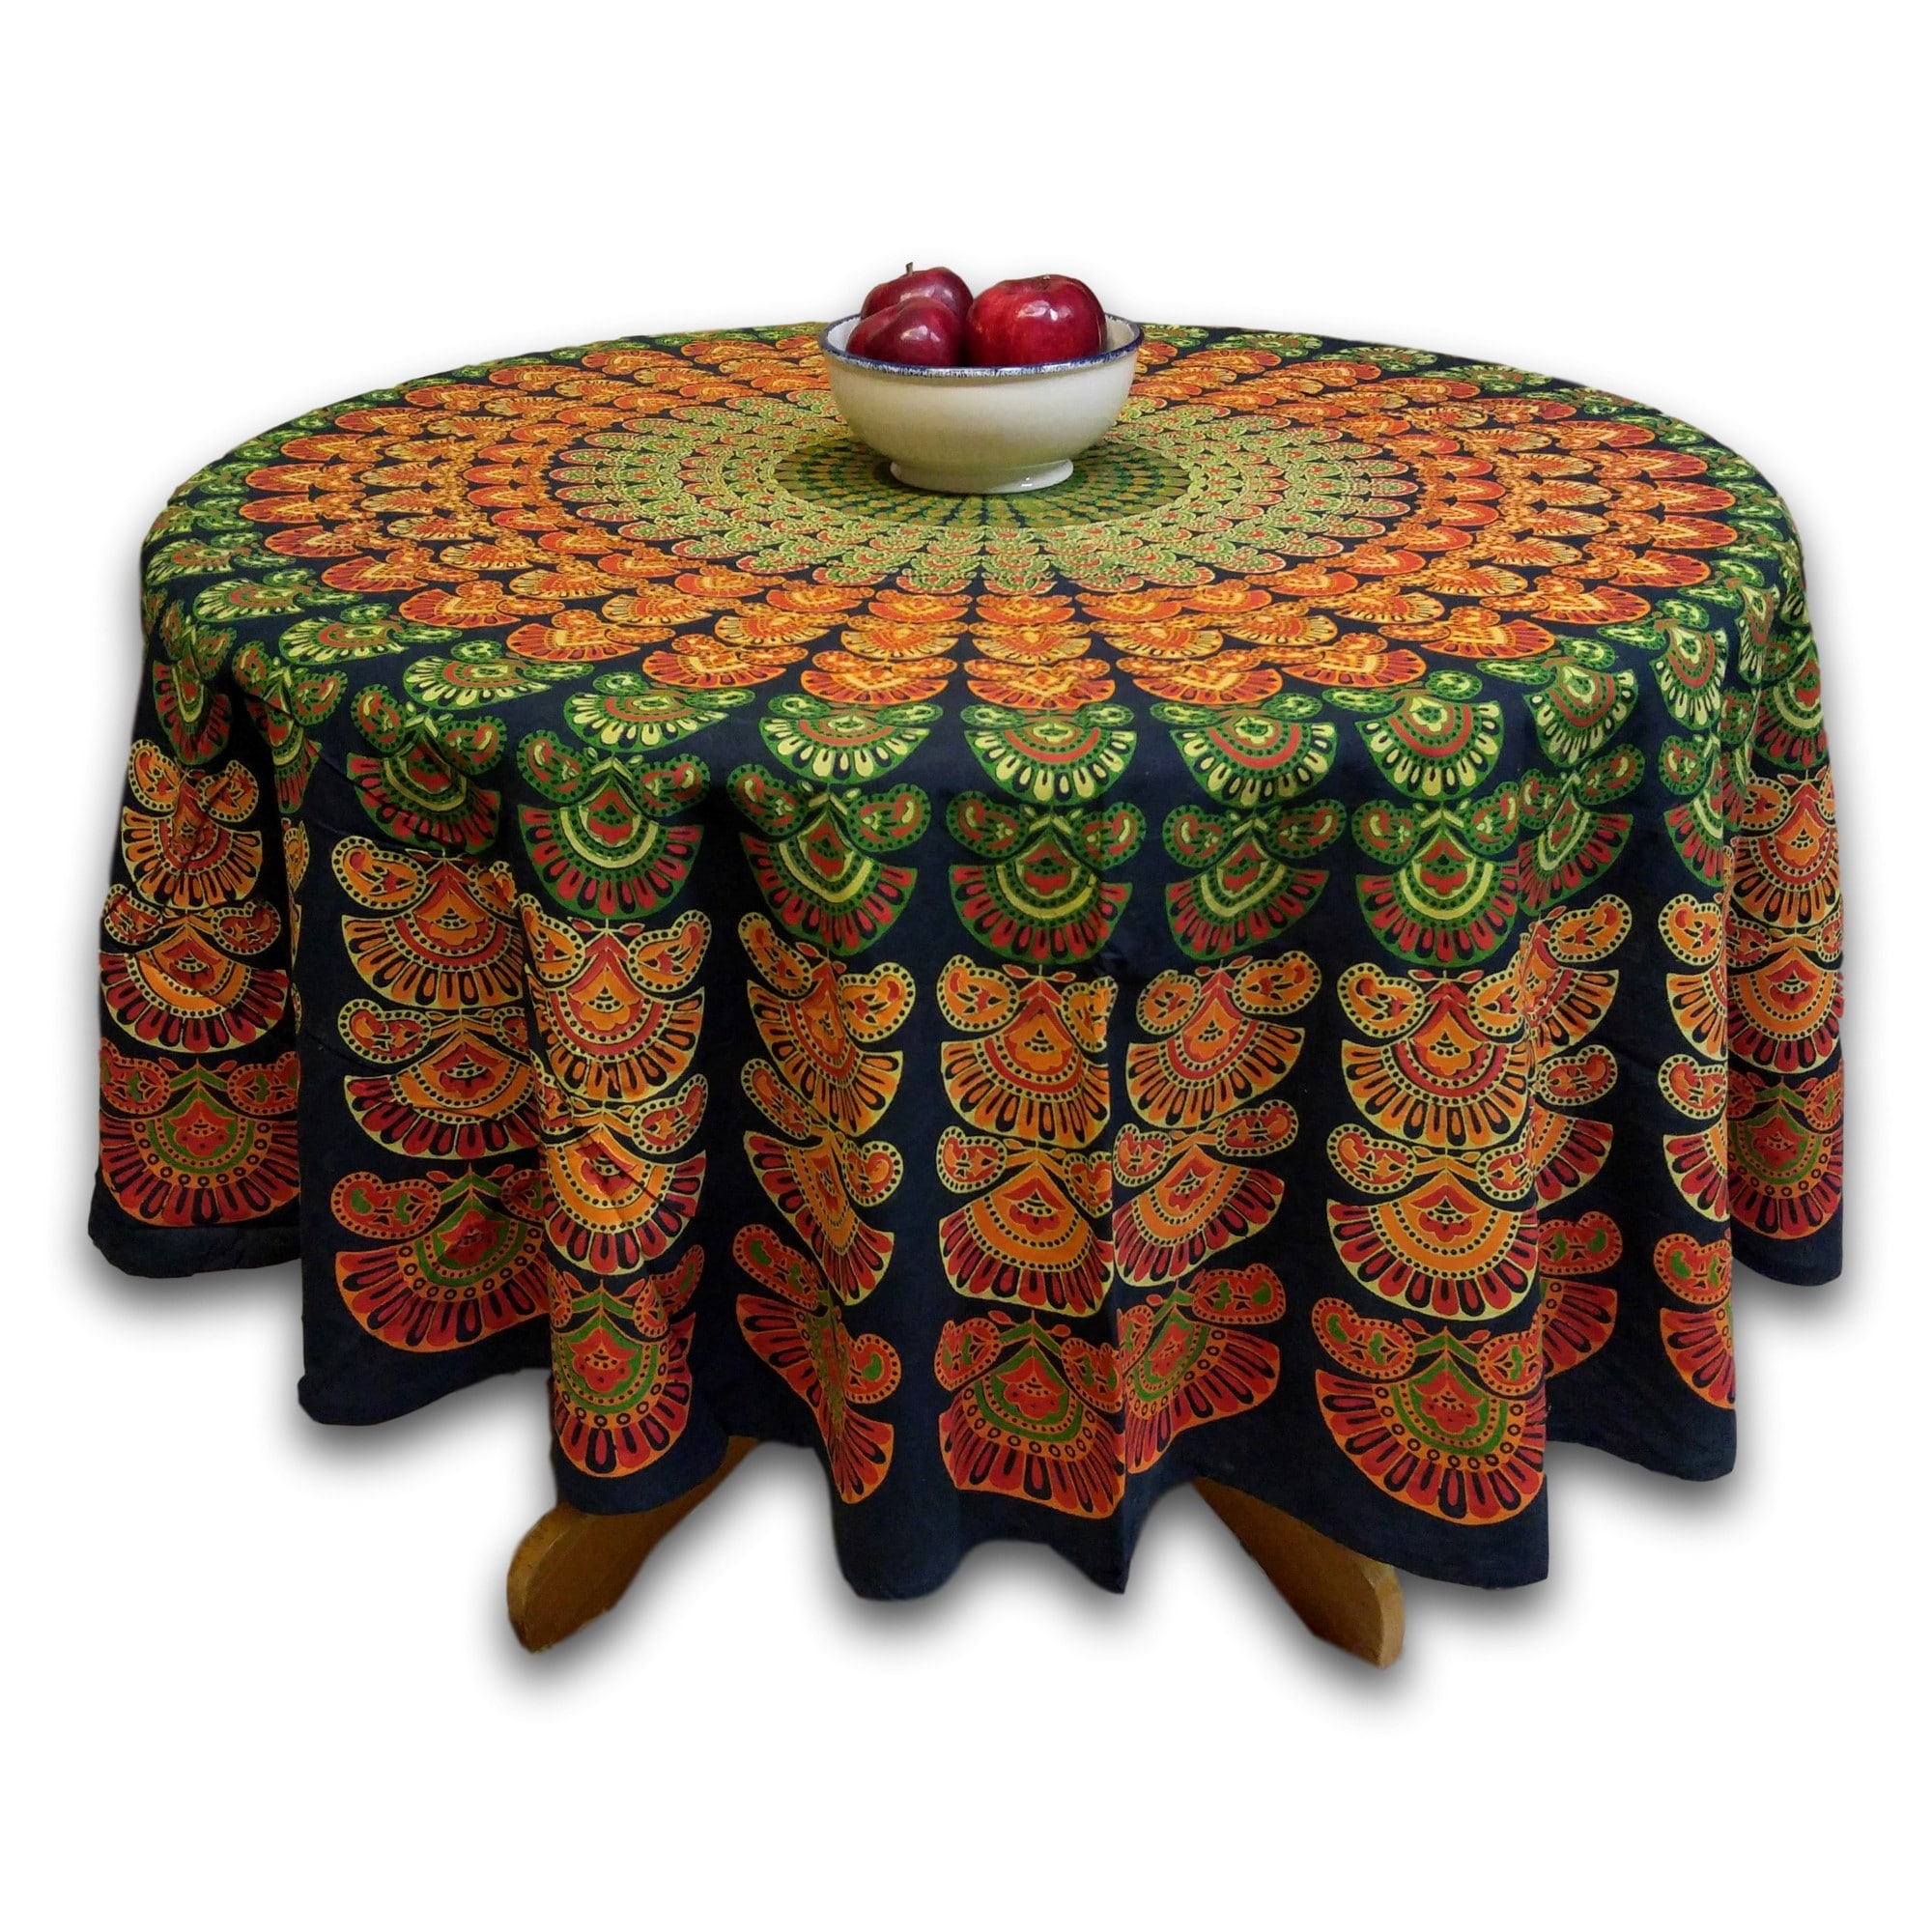 Handmade Sanganer Floral Mandala 100% Cotton Tapestry Tablecloth Spread Full 